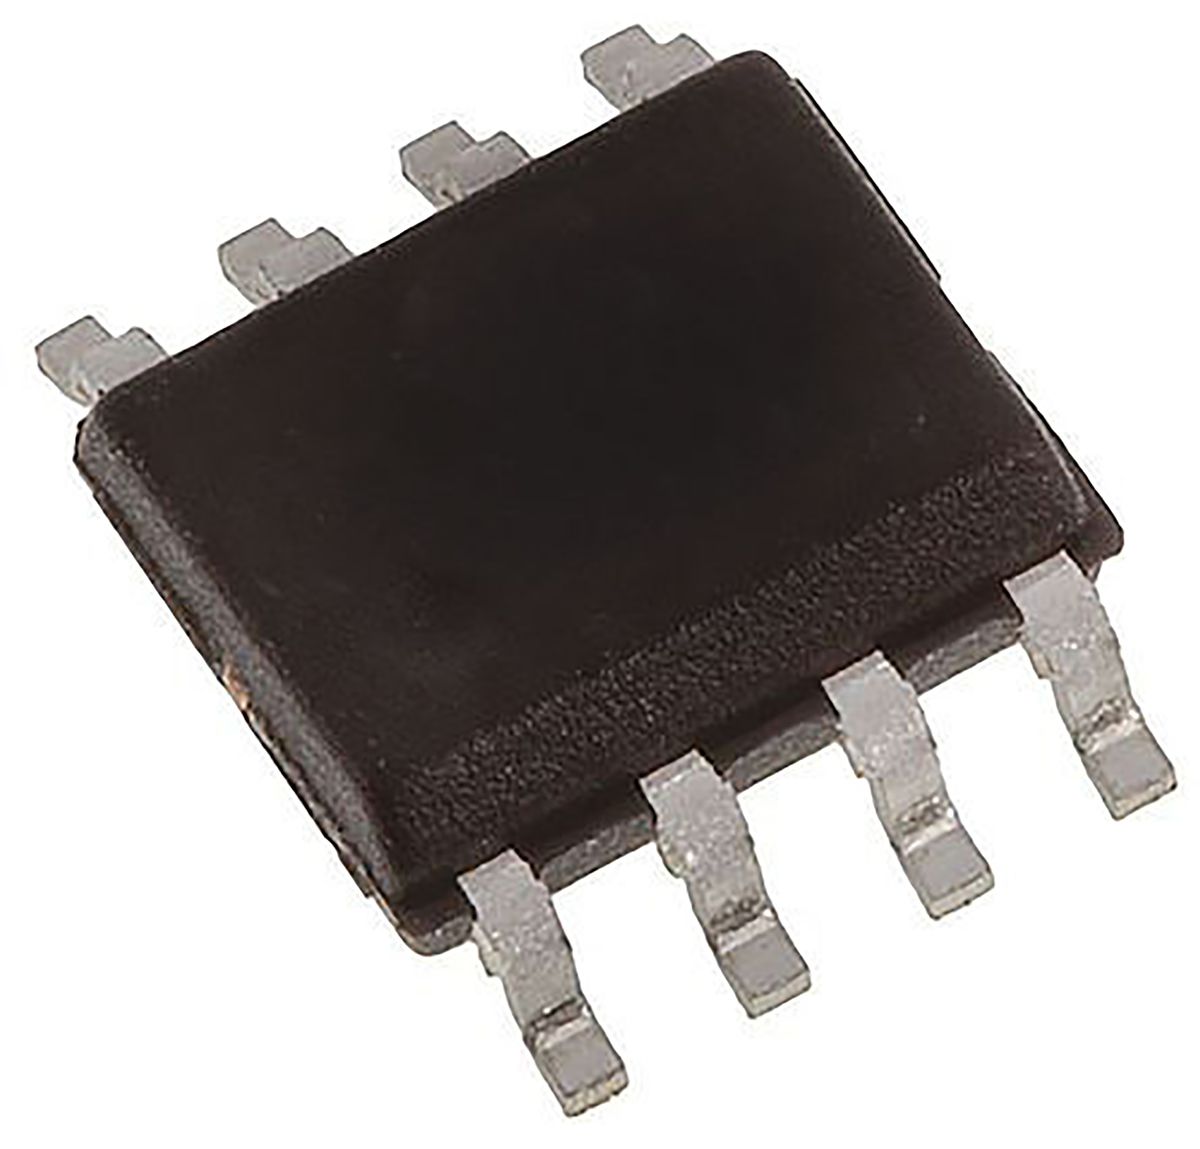 Texas Instruments Dual Peripheral Driver 8-Pin SOIC, SN75451BDR